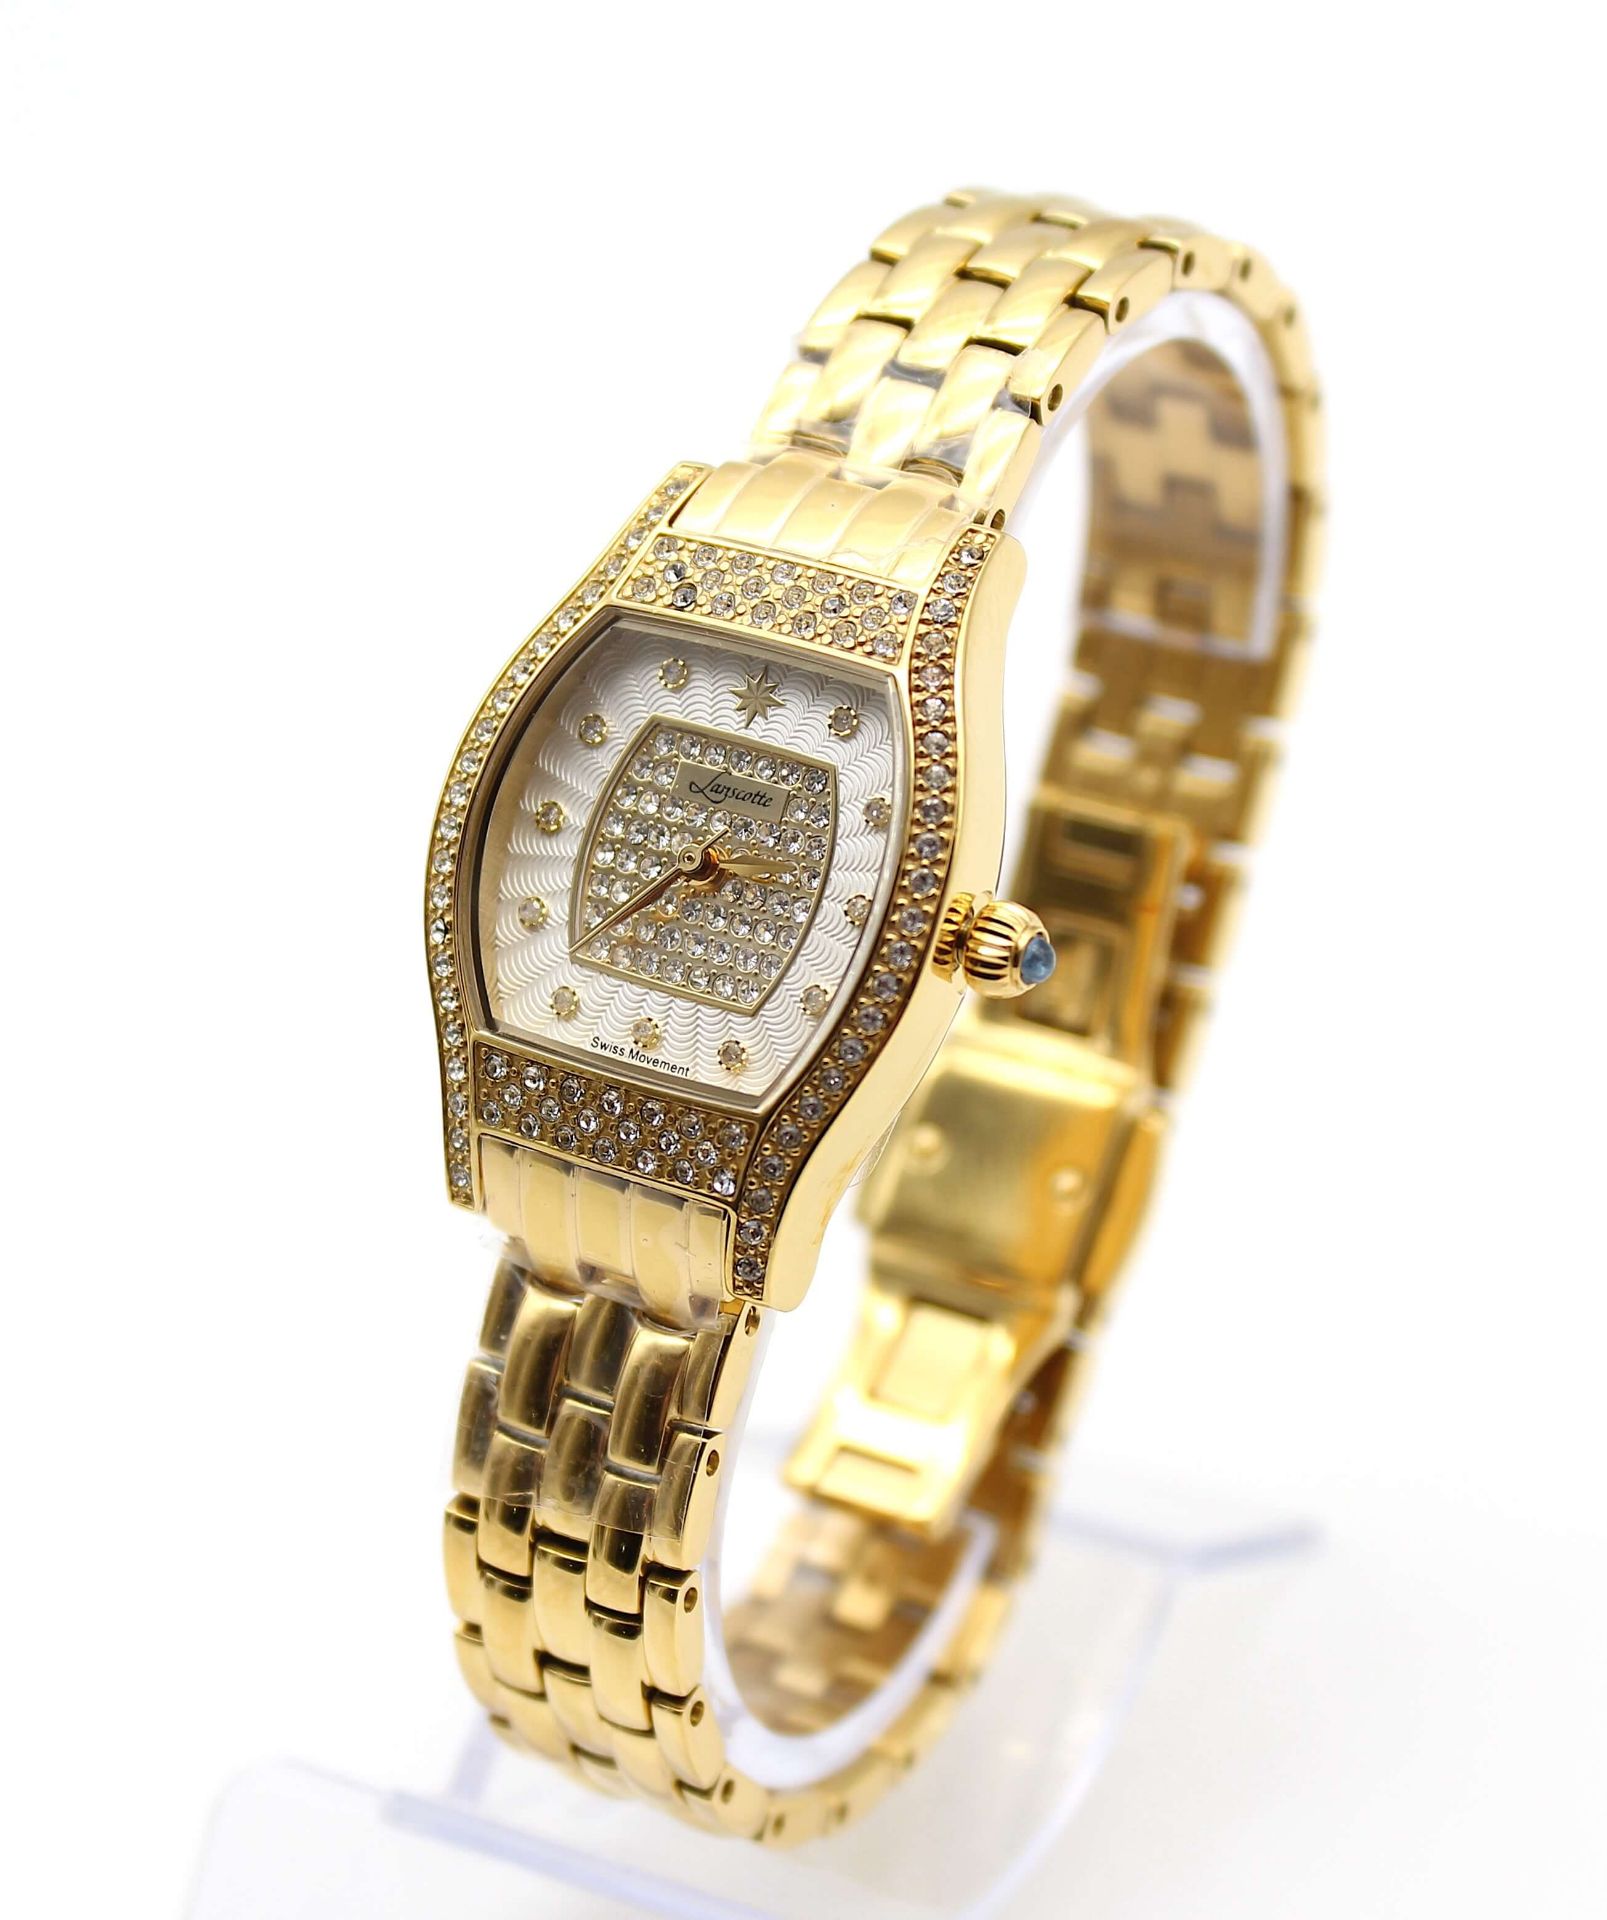 Ladies wrist Watch Lanscotte gold plated with Swarovski Crystals